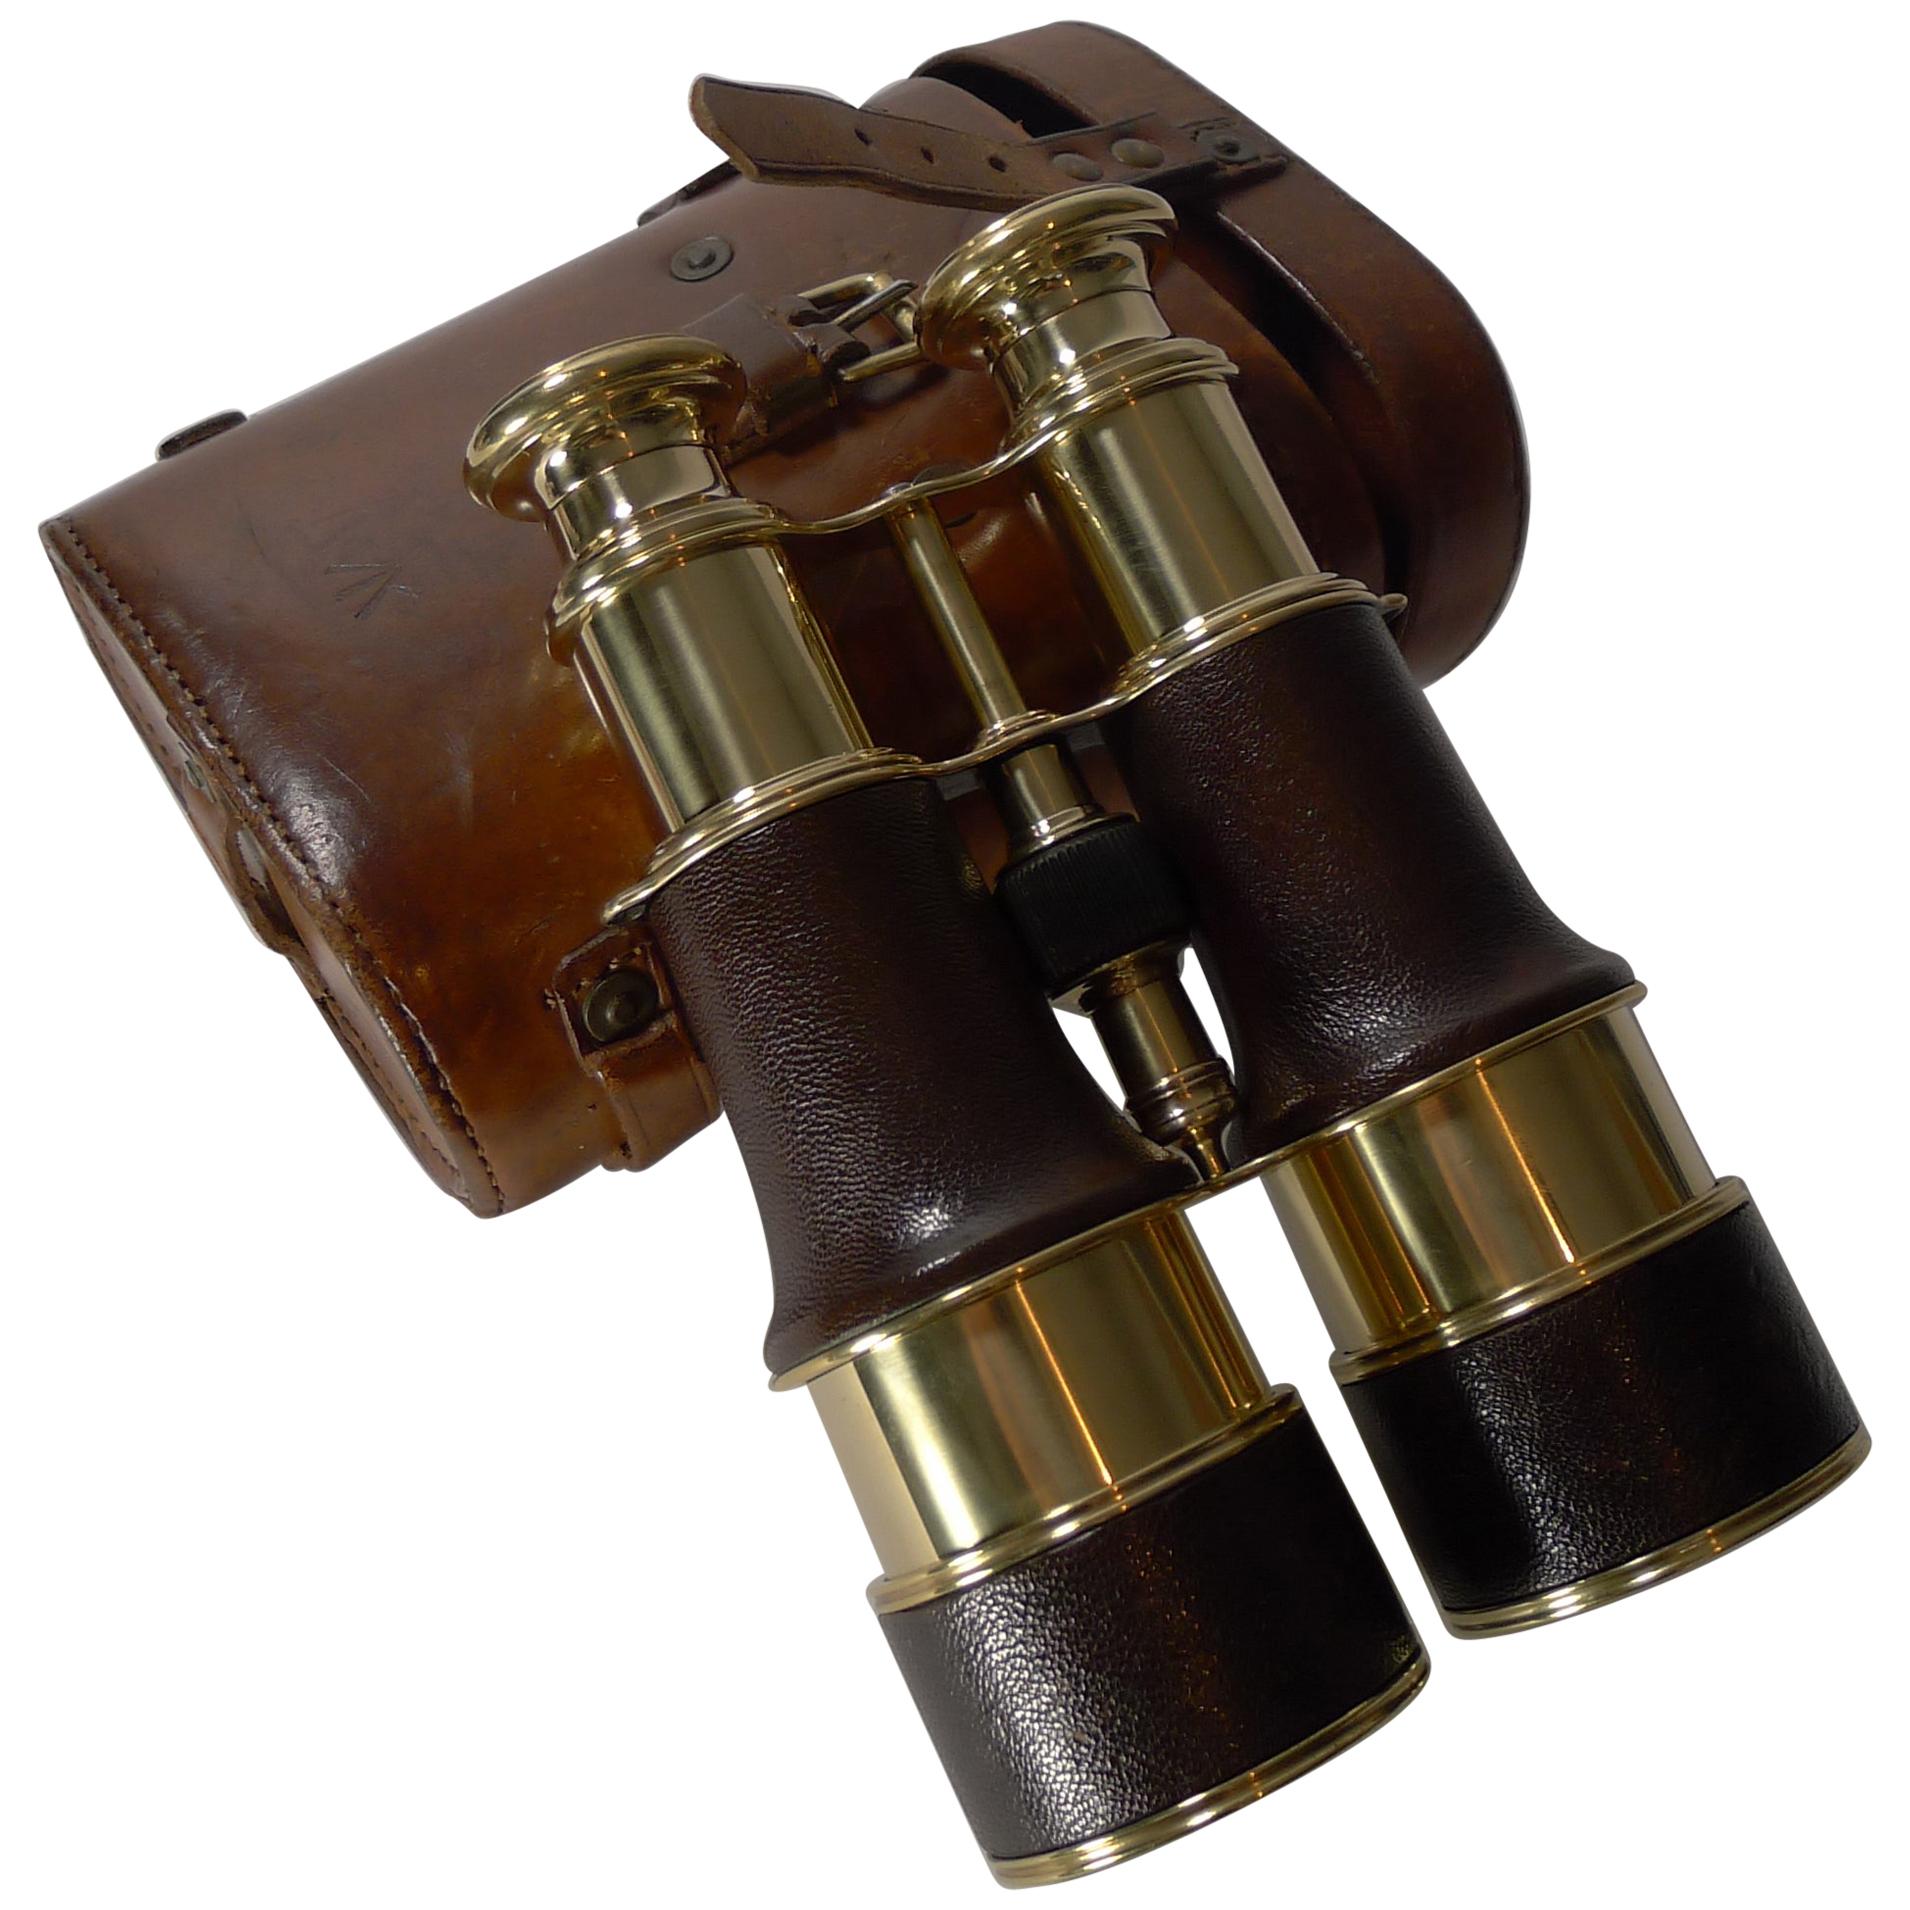 WW1 Binoculars and Case, British Officer's Issue